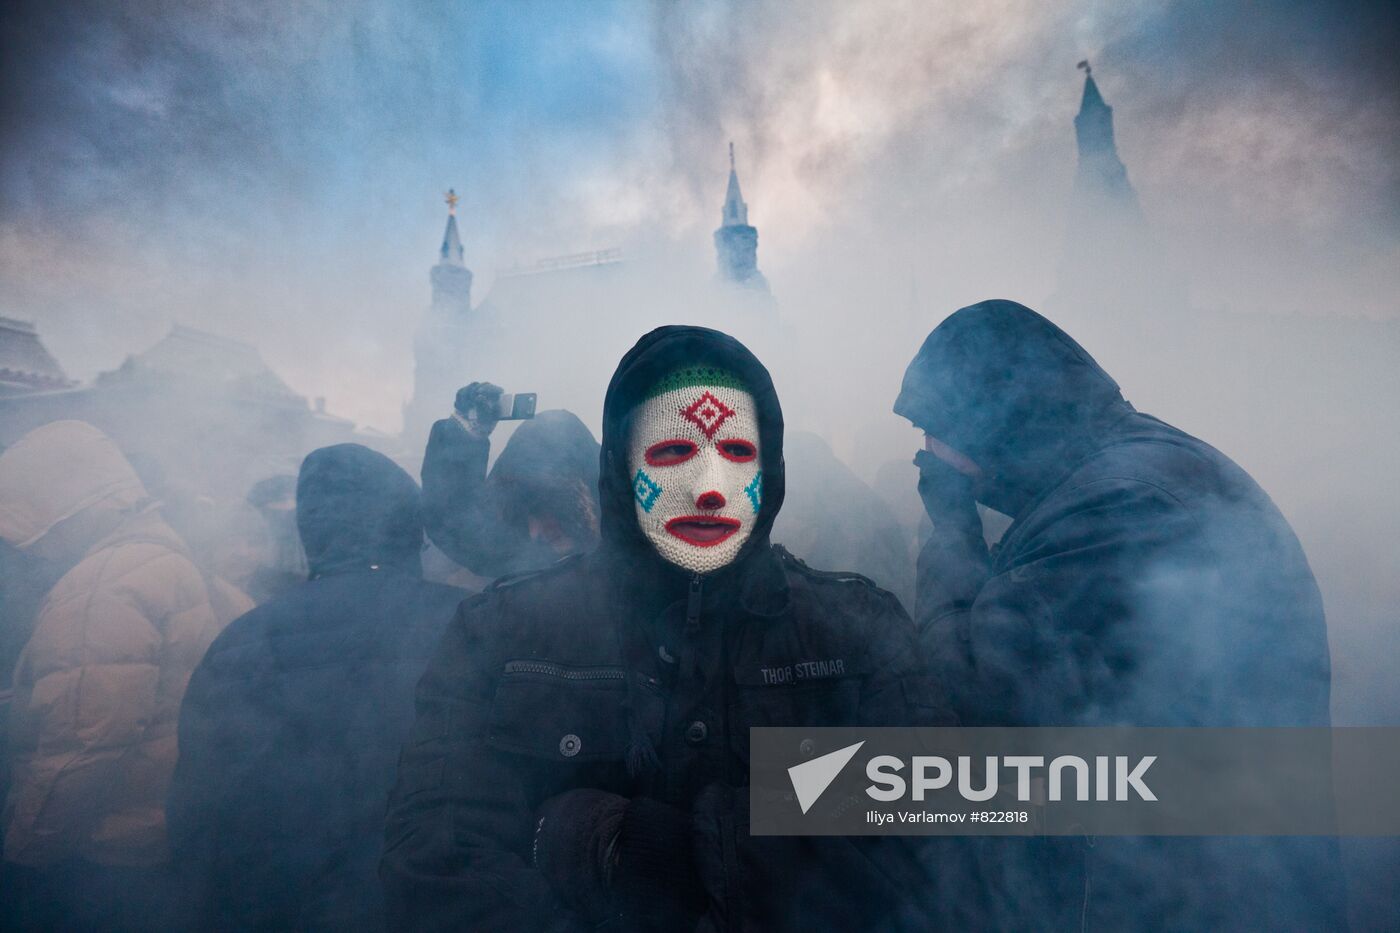 Riot on Manezhnaya Square after Yegor Sviridov's death